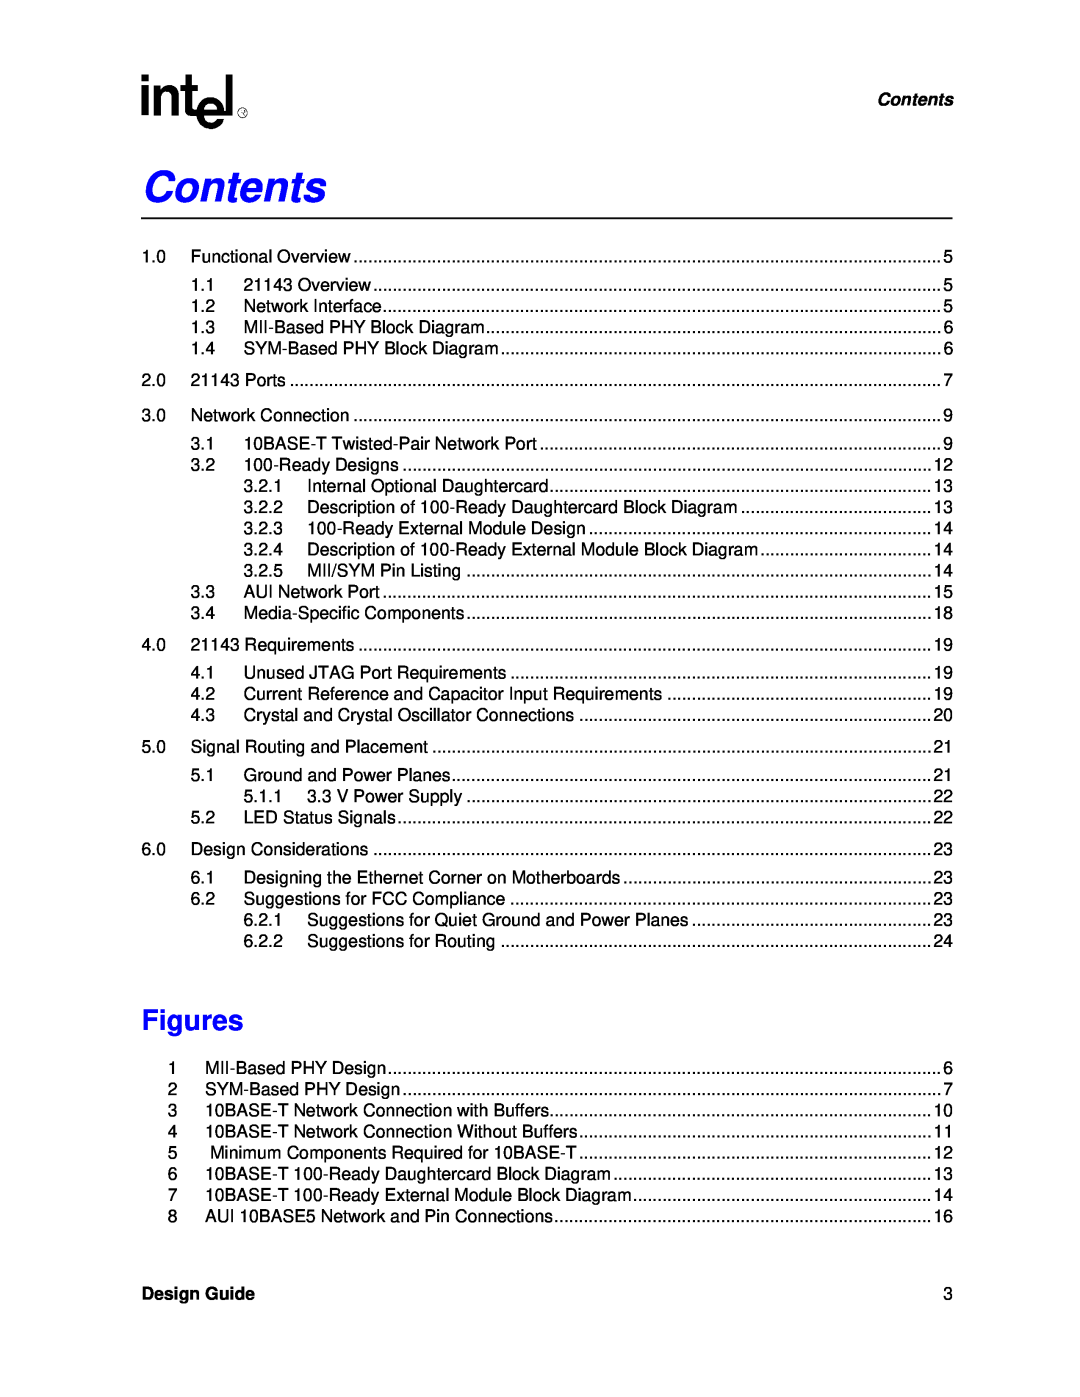 Intel 21143 manual Figures, Contents, Design Guide 